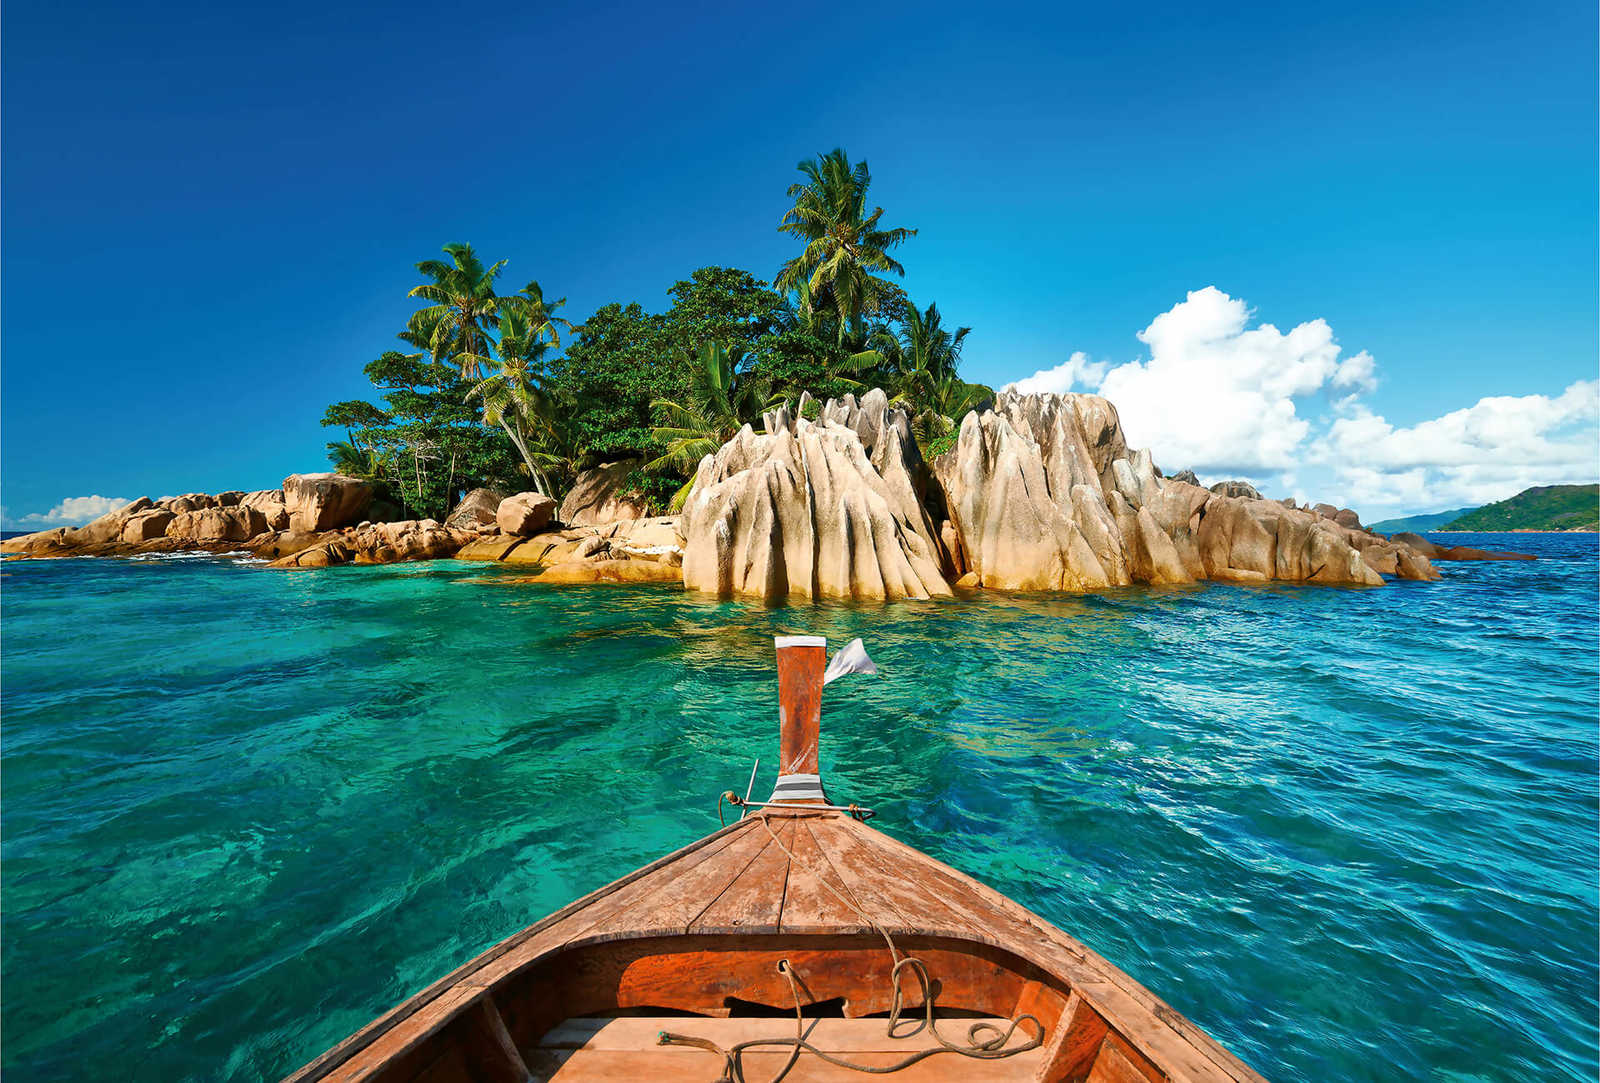         Photo wallpaper Seychelles island in the sea - blue, brown, green
    